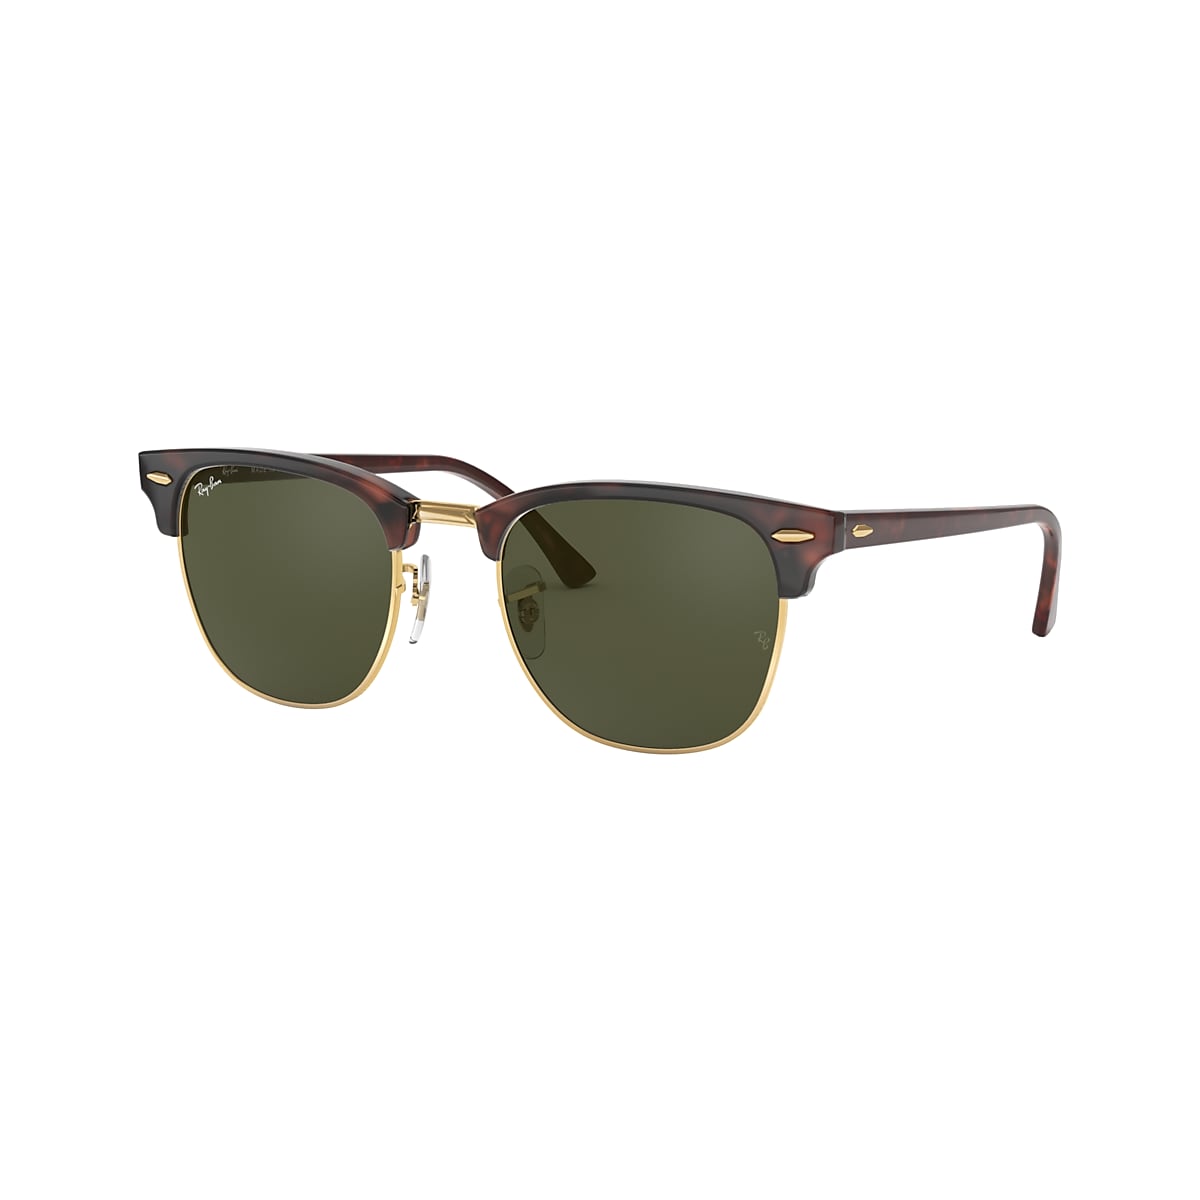 Ray-Ban RB3016 Classic 49 Green & Tortoise Gold Sunglasses | Sunglass USA